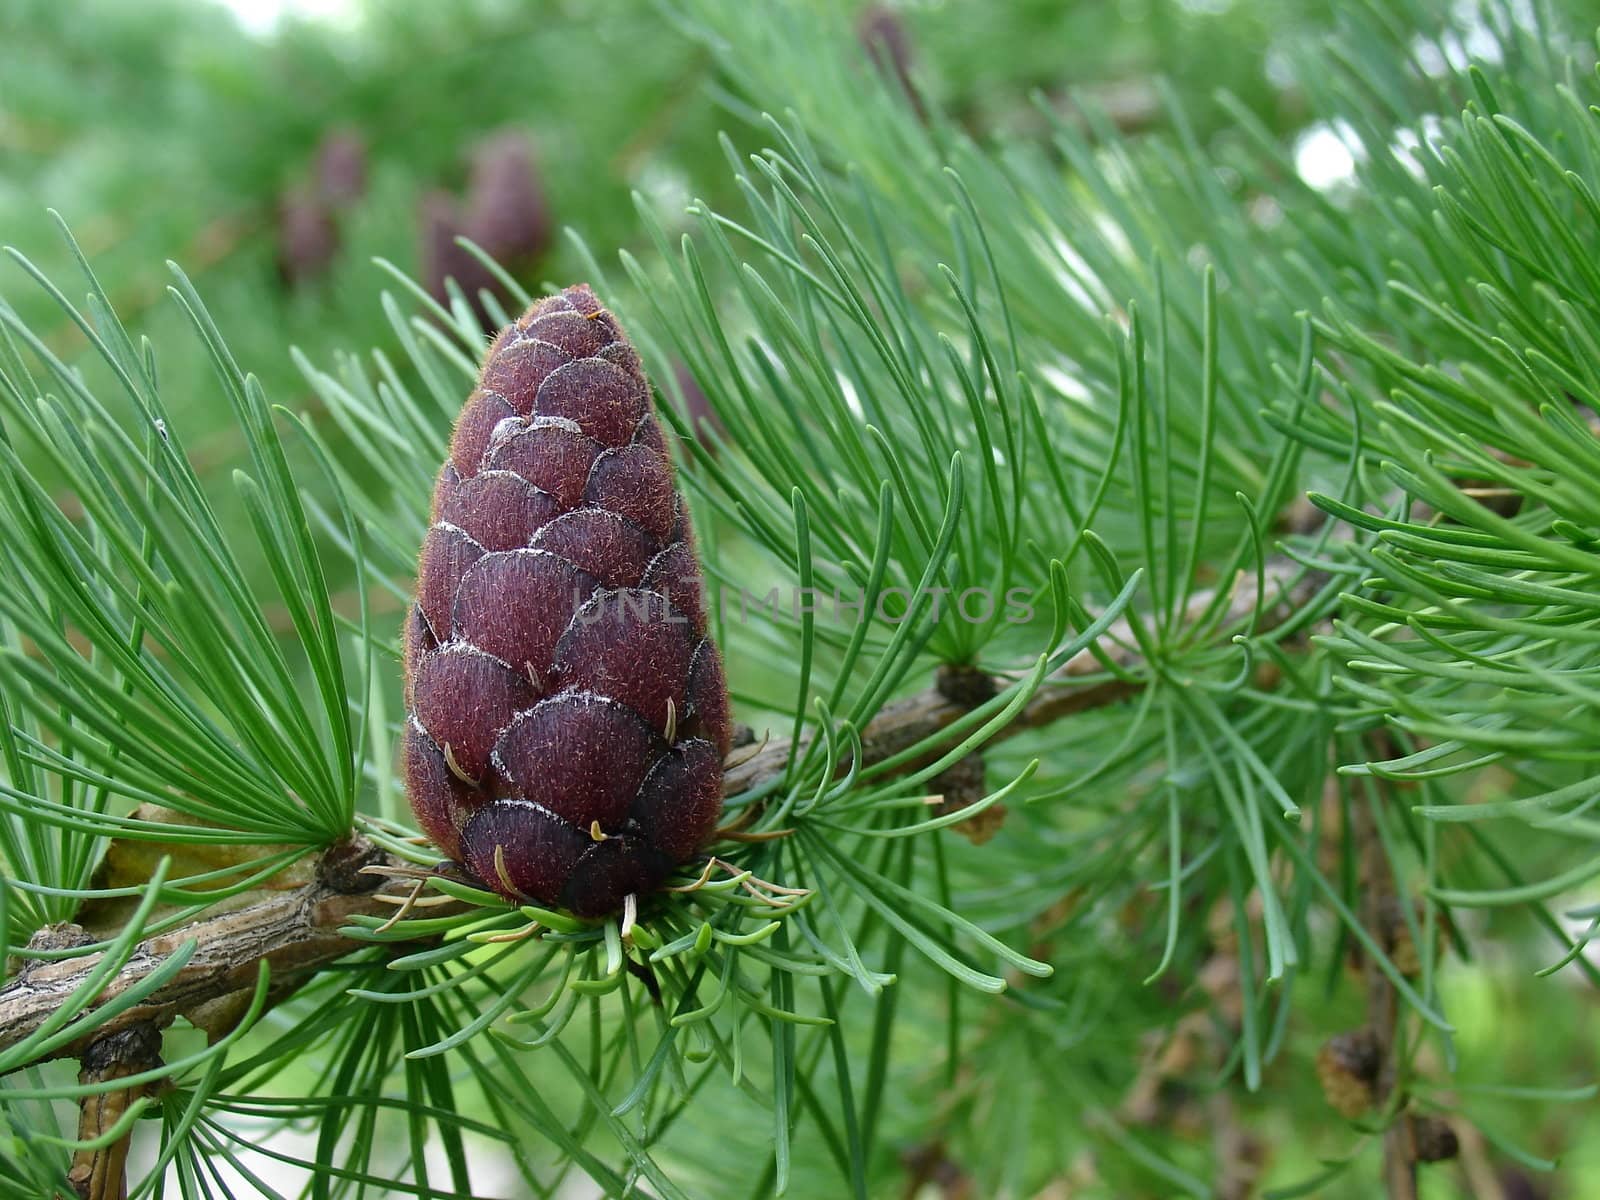 Single cone of the pine around the needles